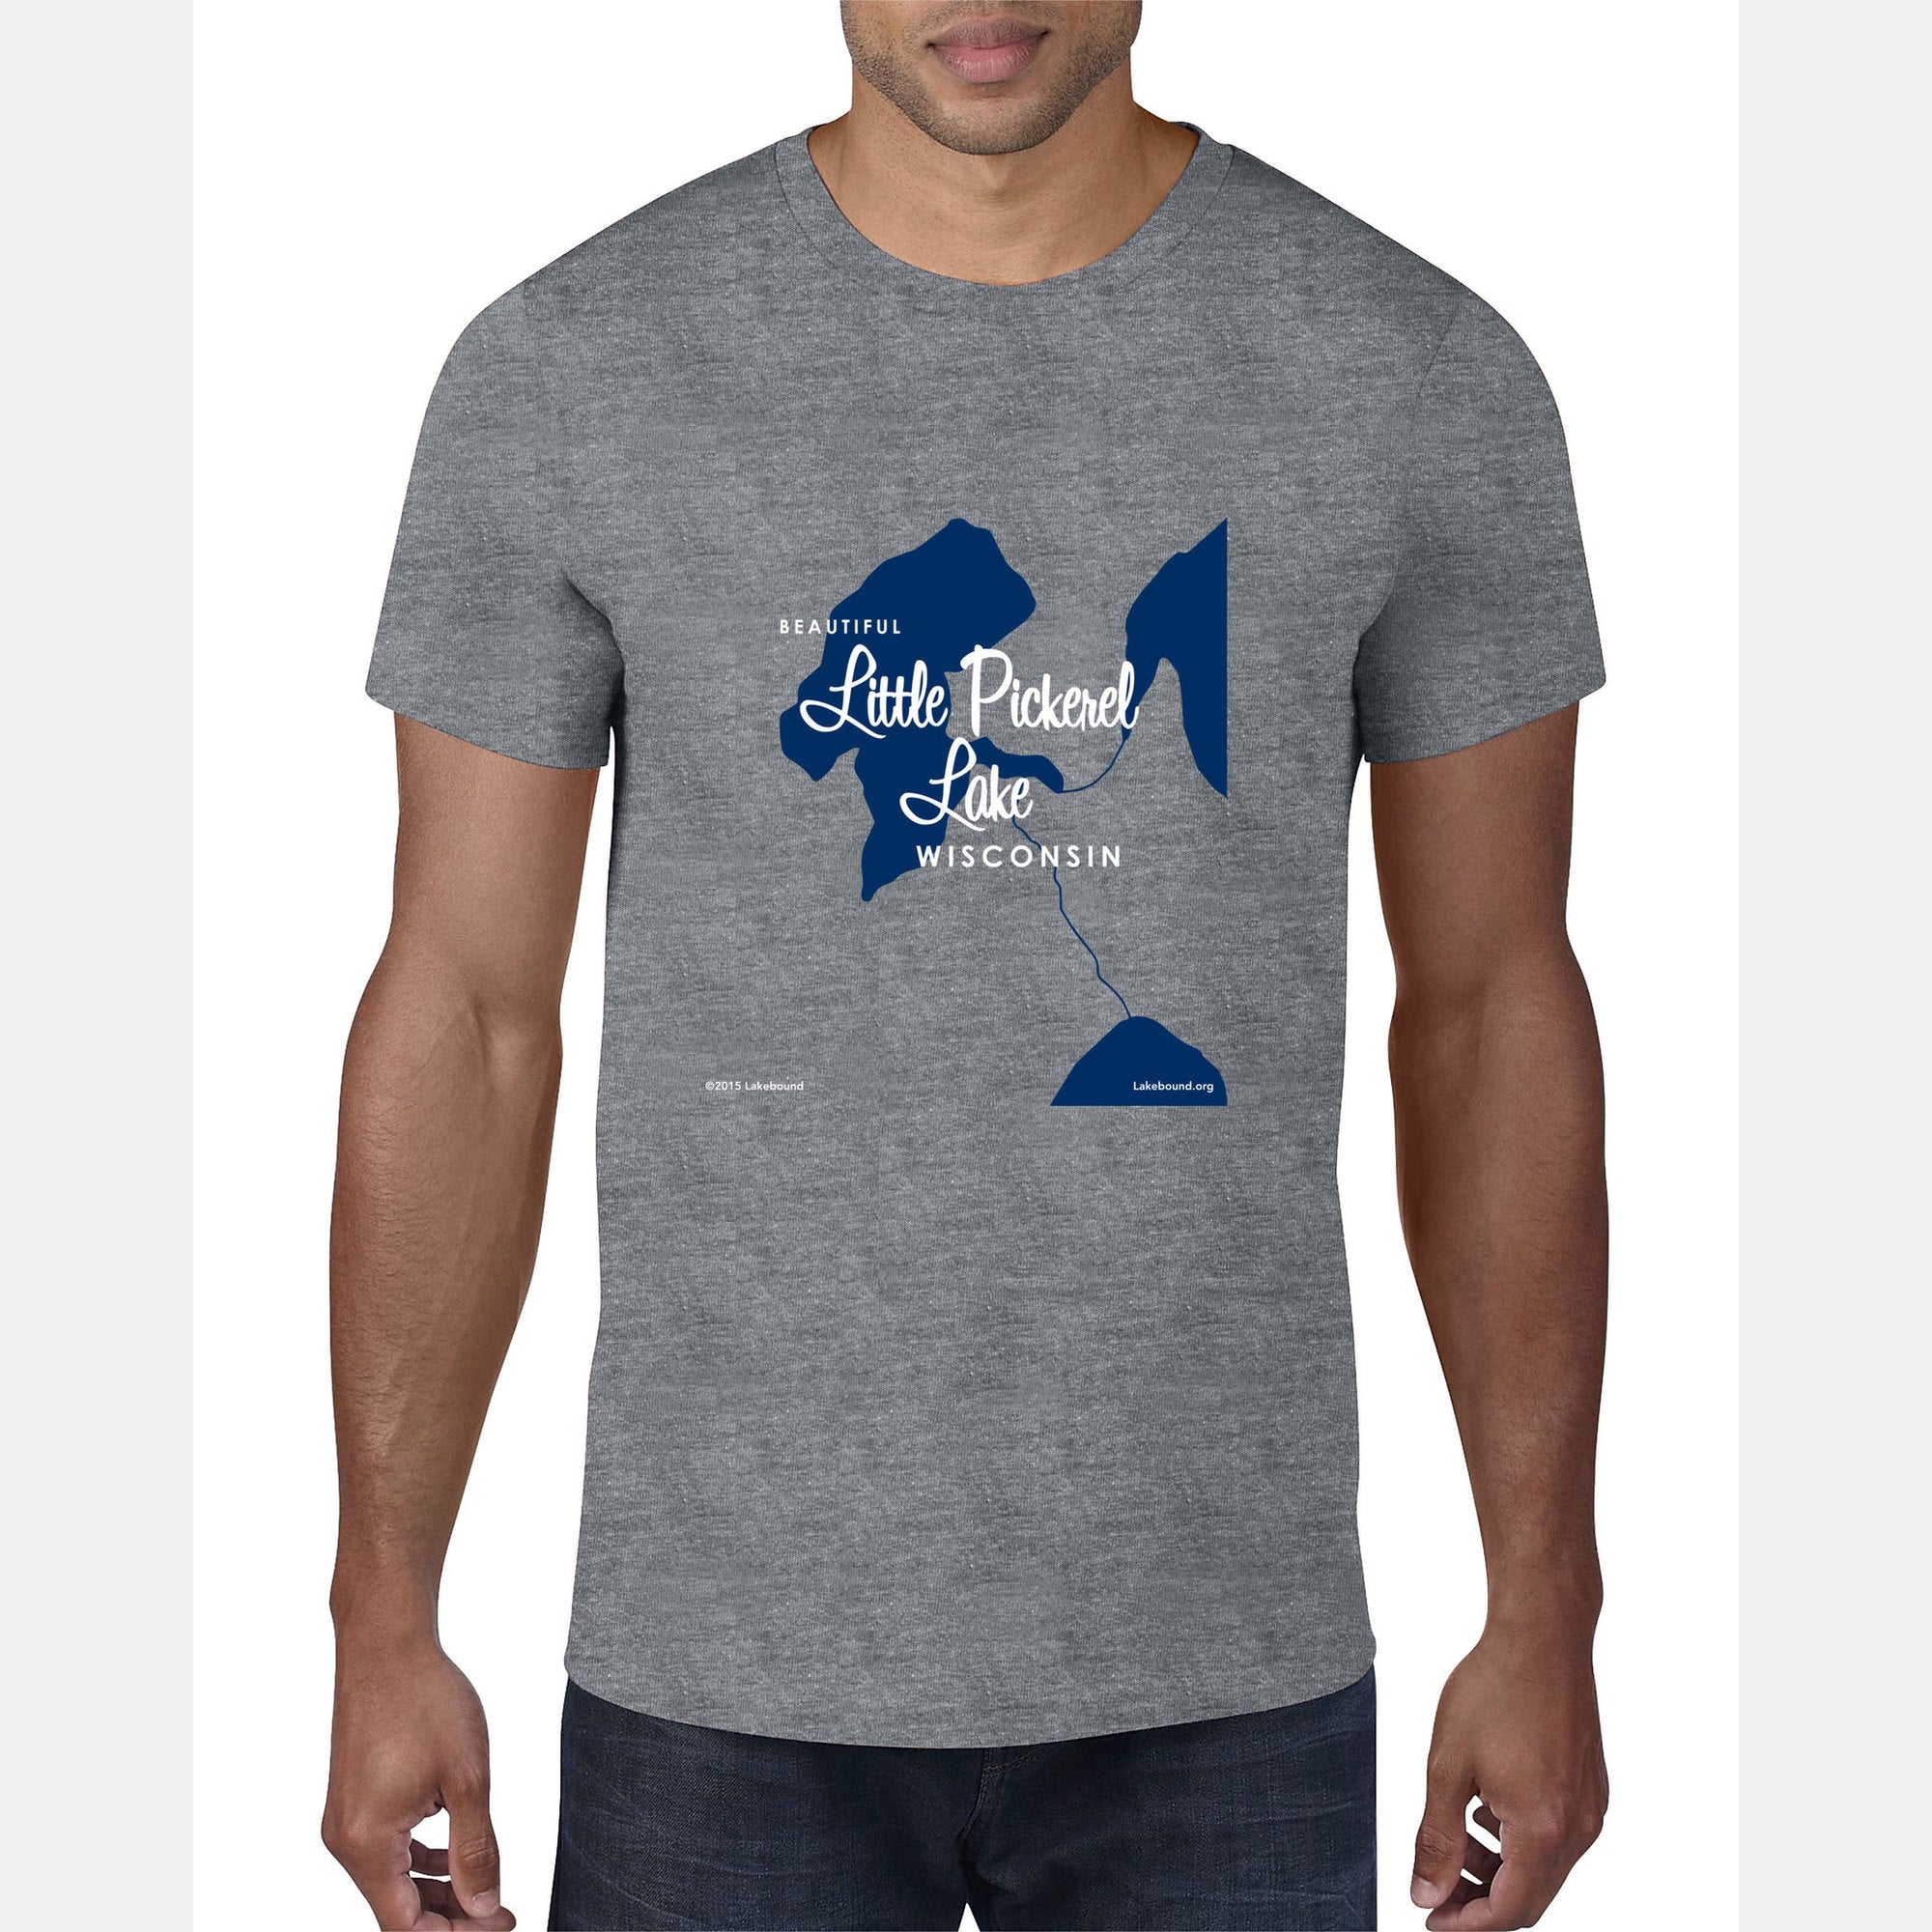 Little Pickerel Lake Wisconsin, T-Shirt